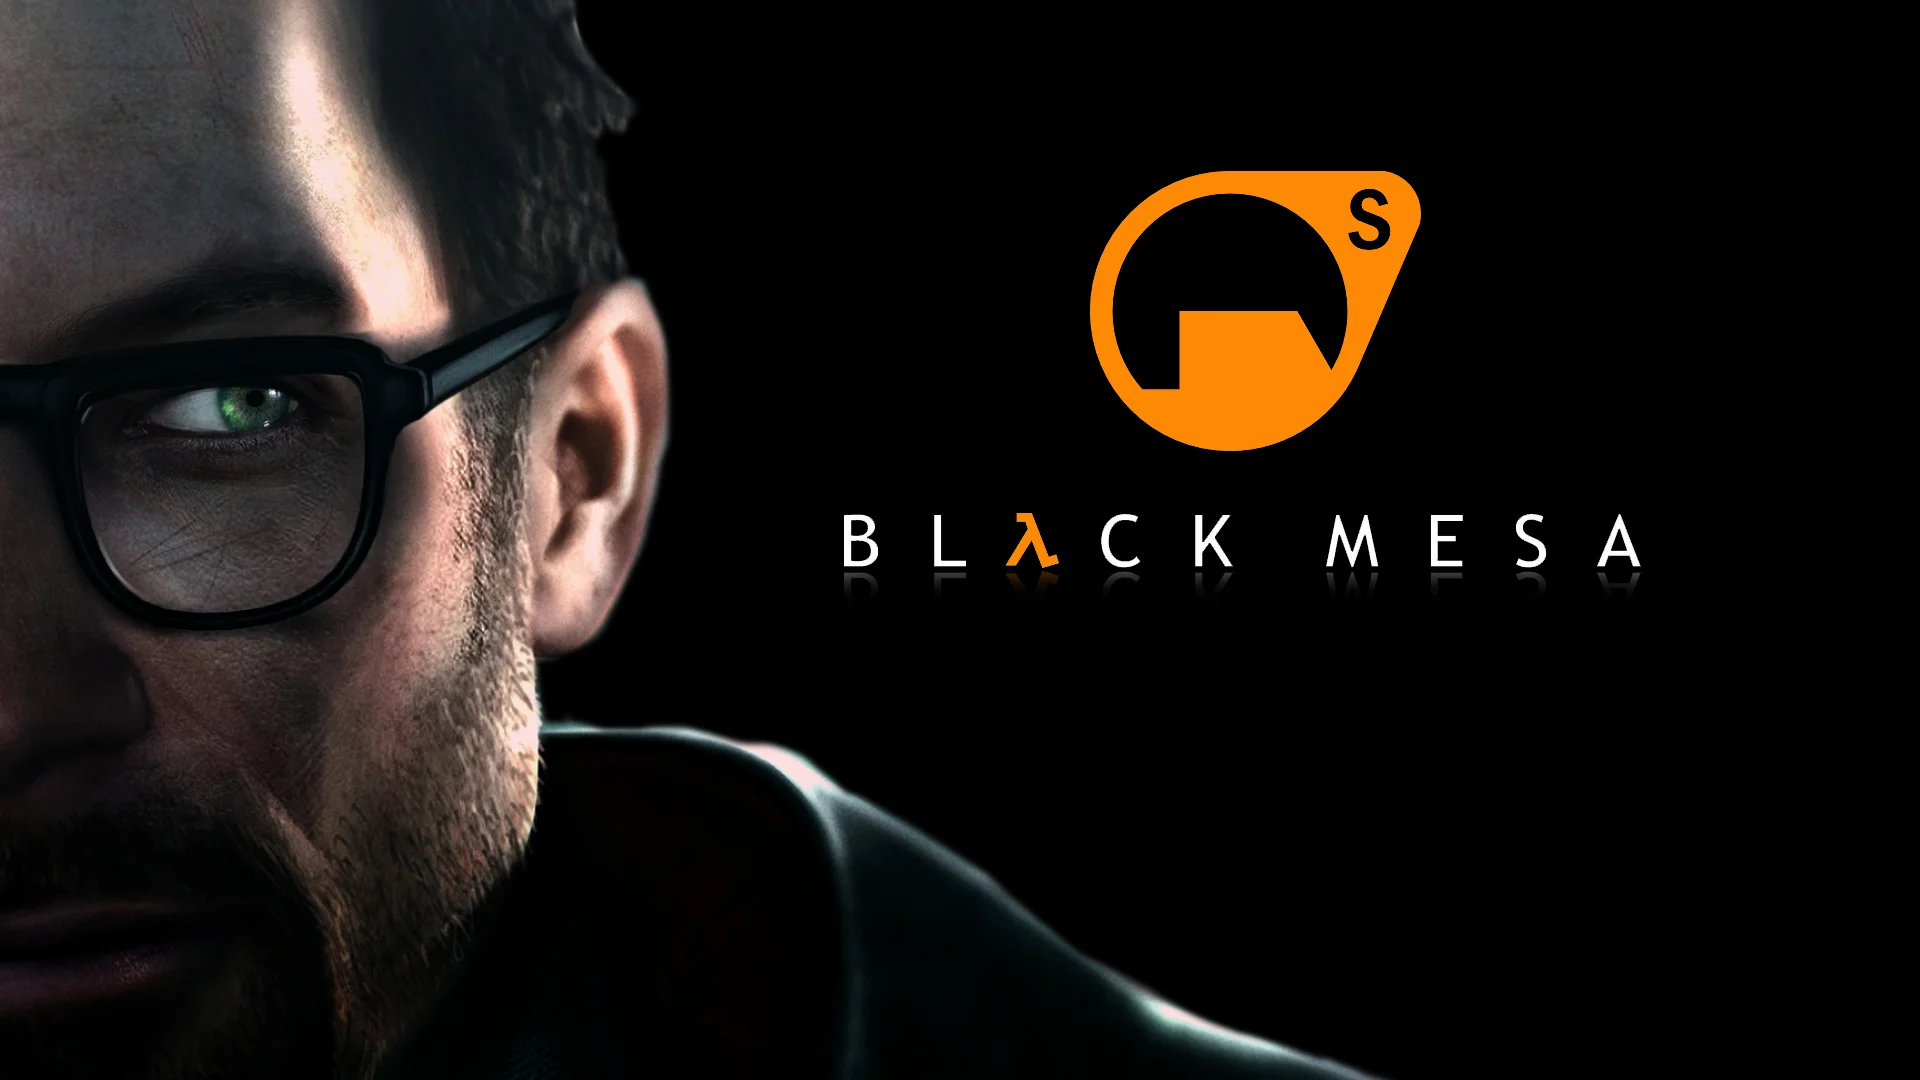 Half-Life Black Mesa received a global update